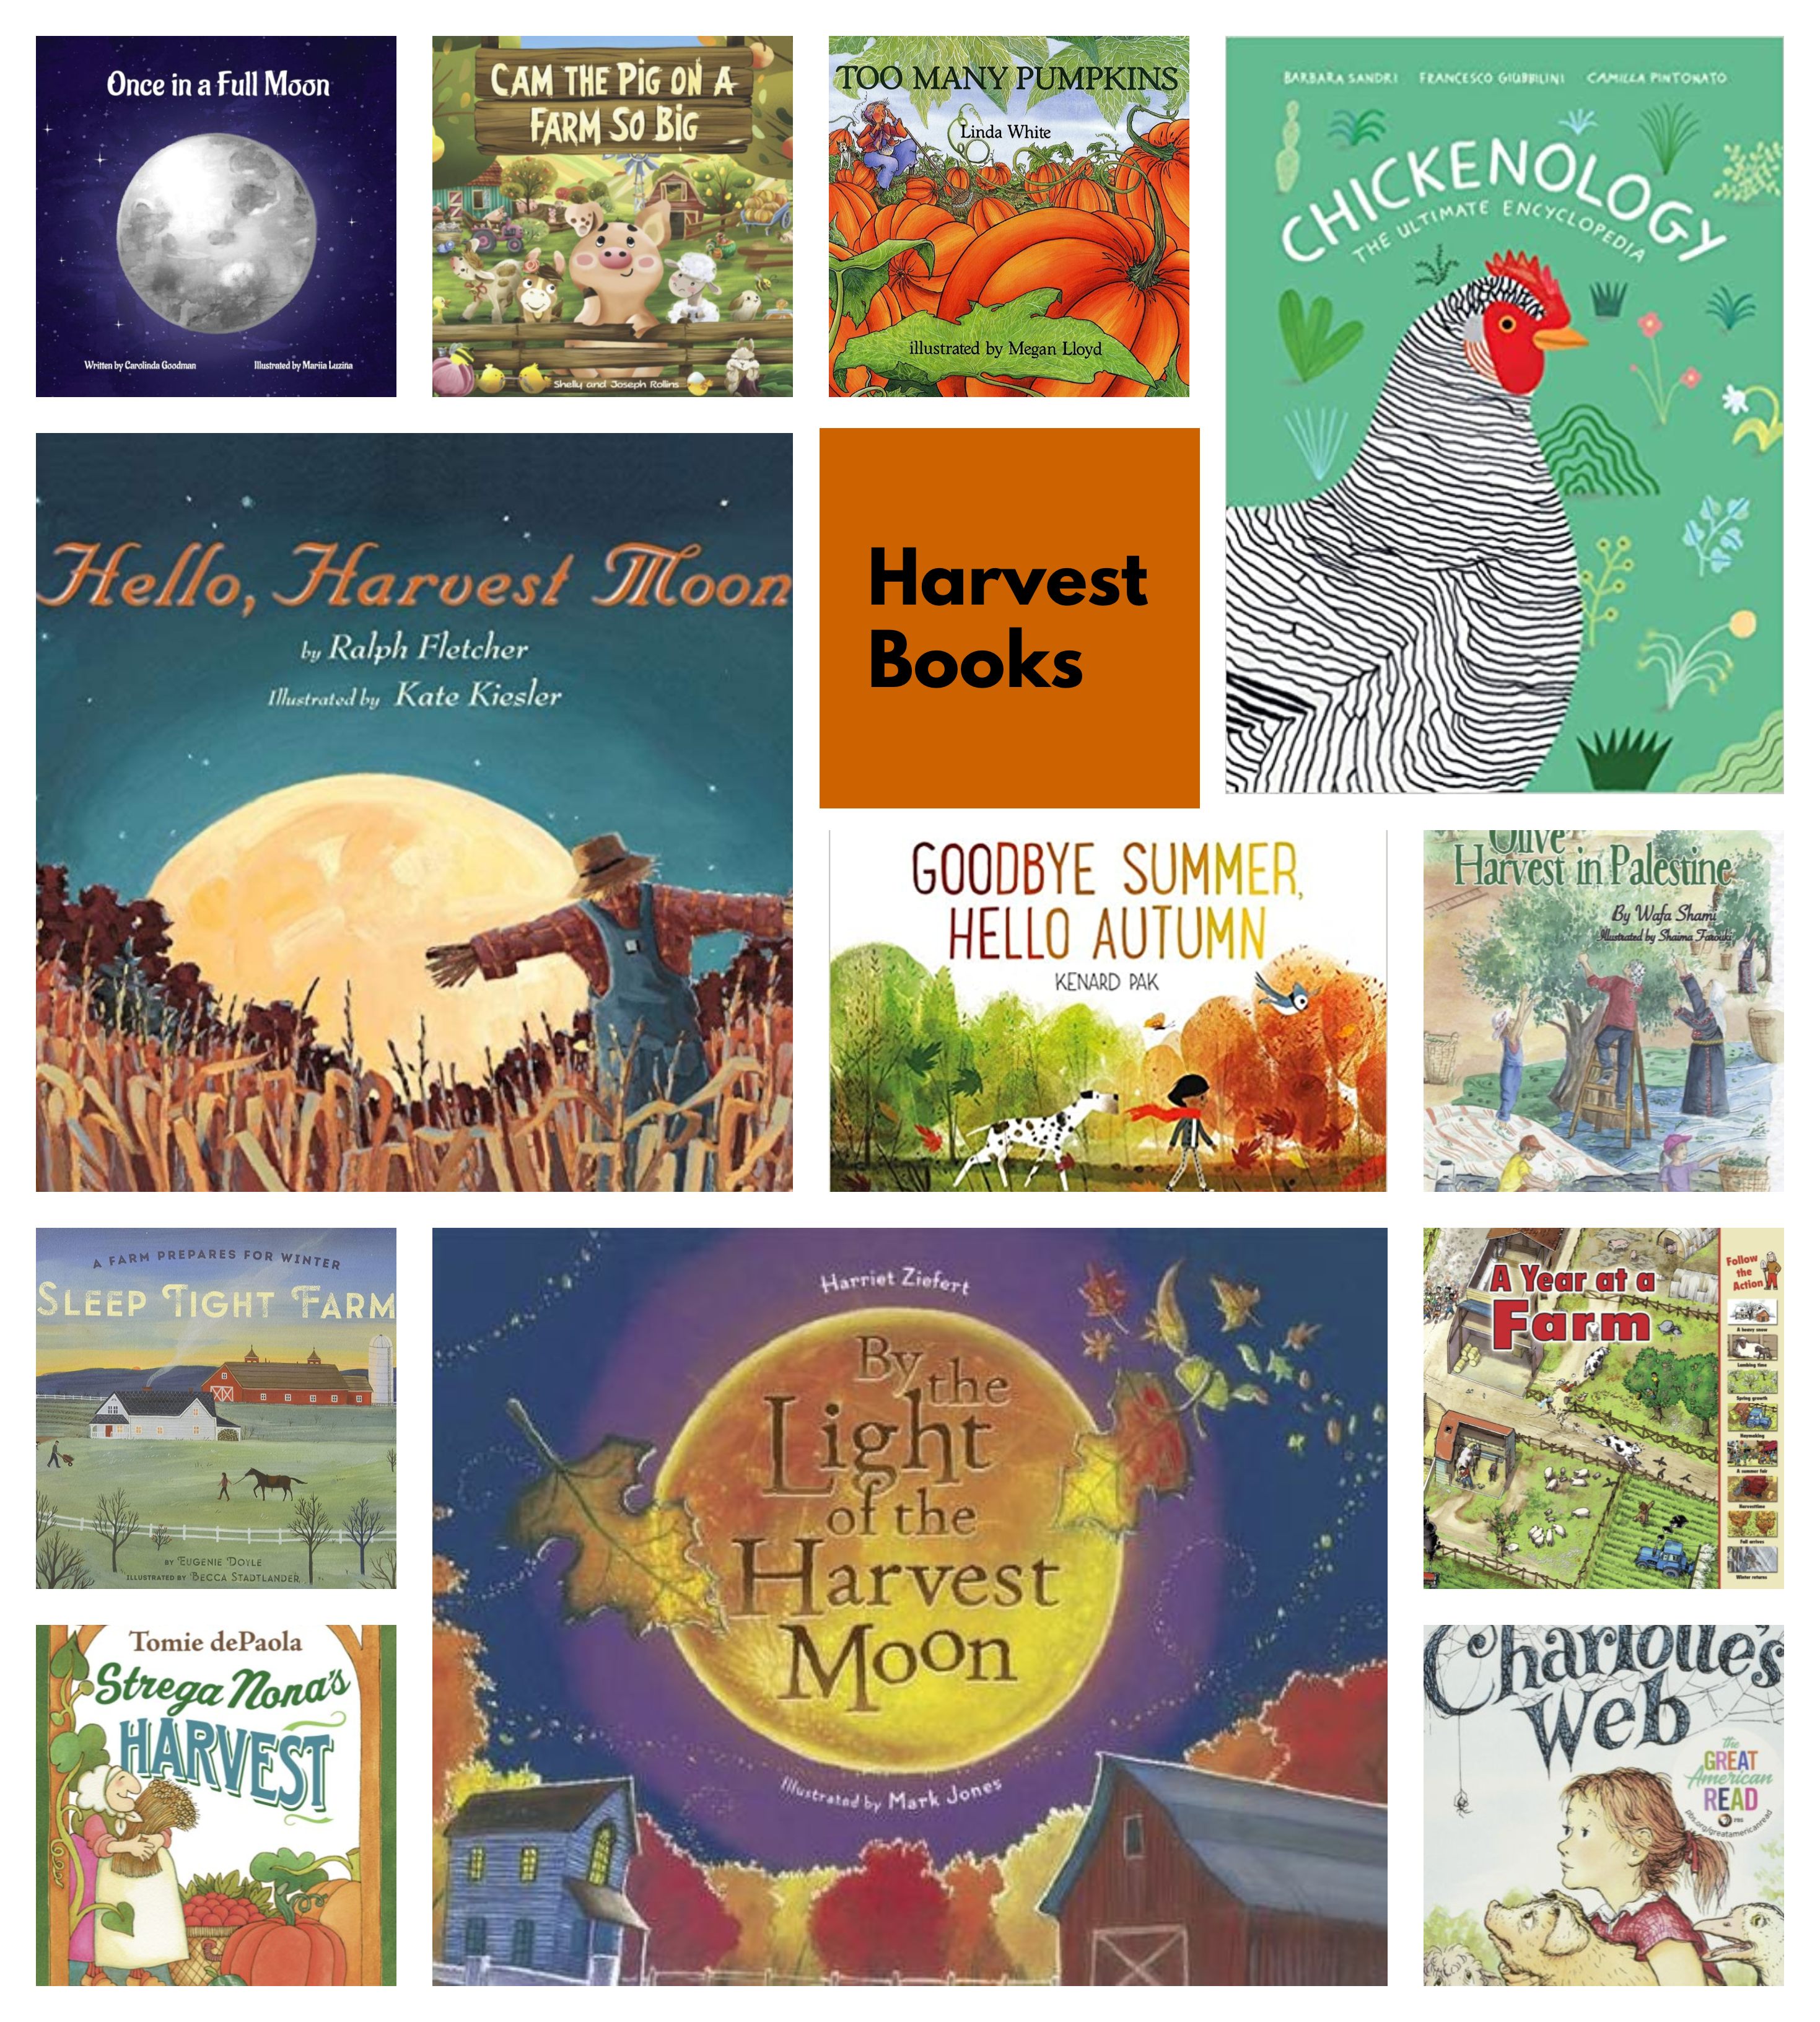 Harvest Books